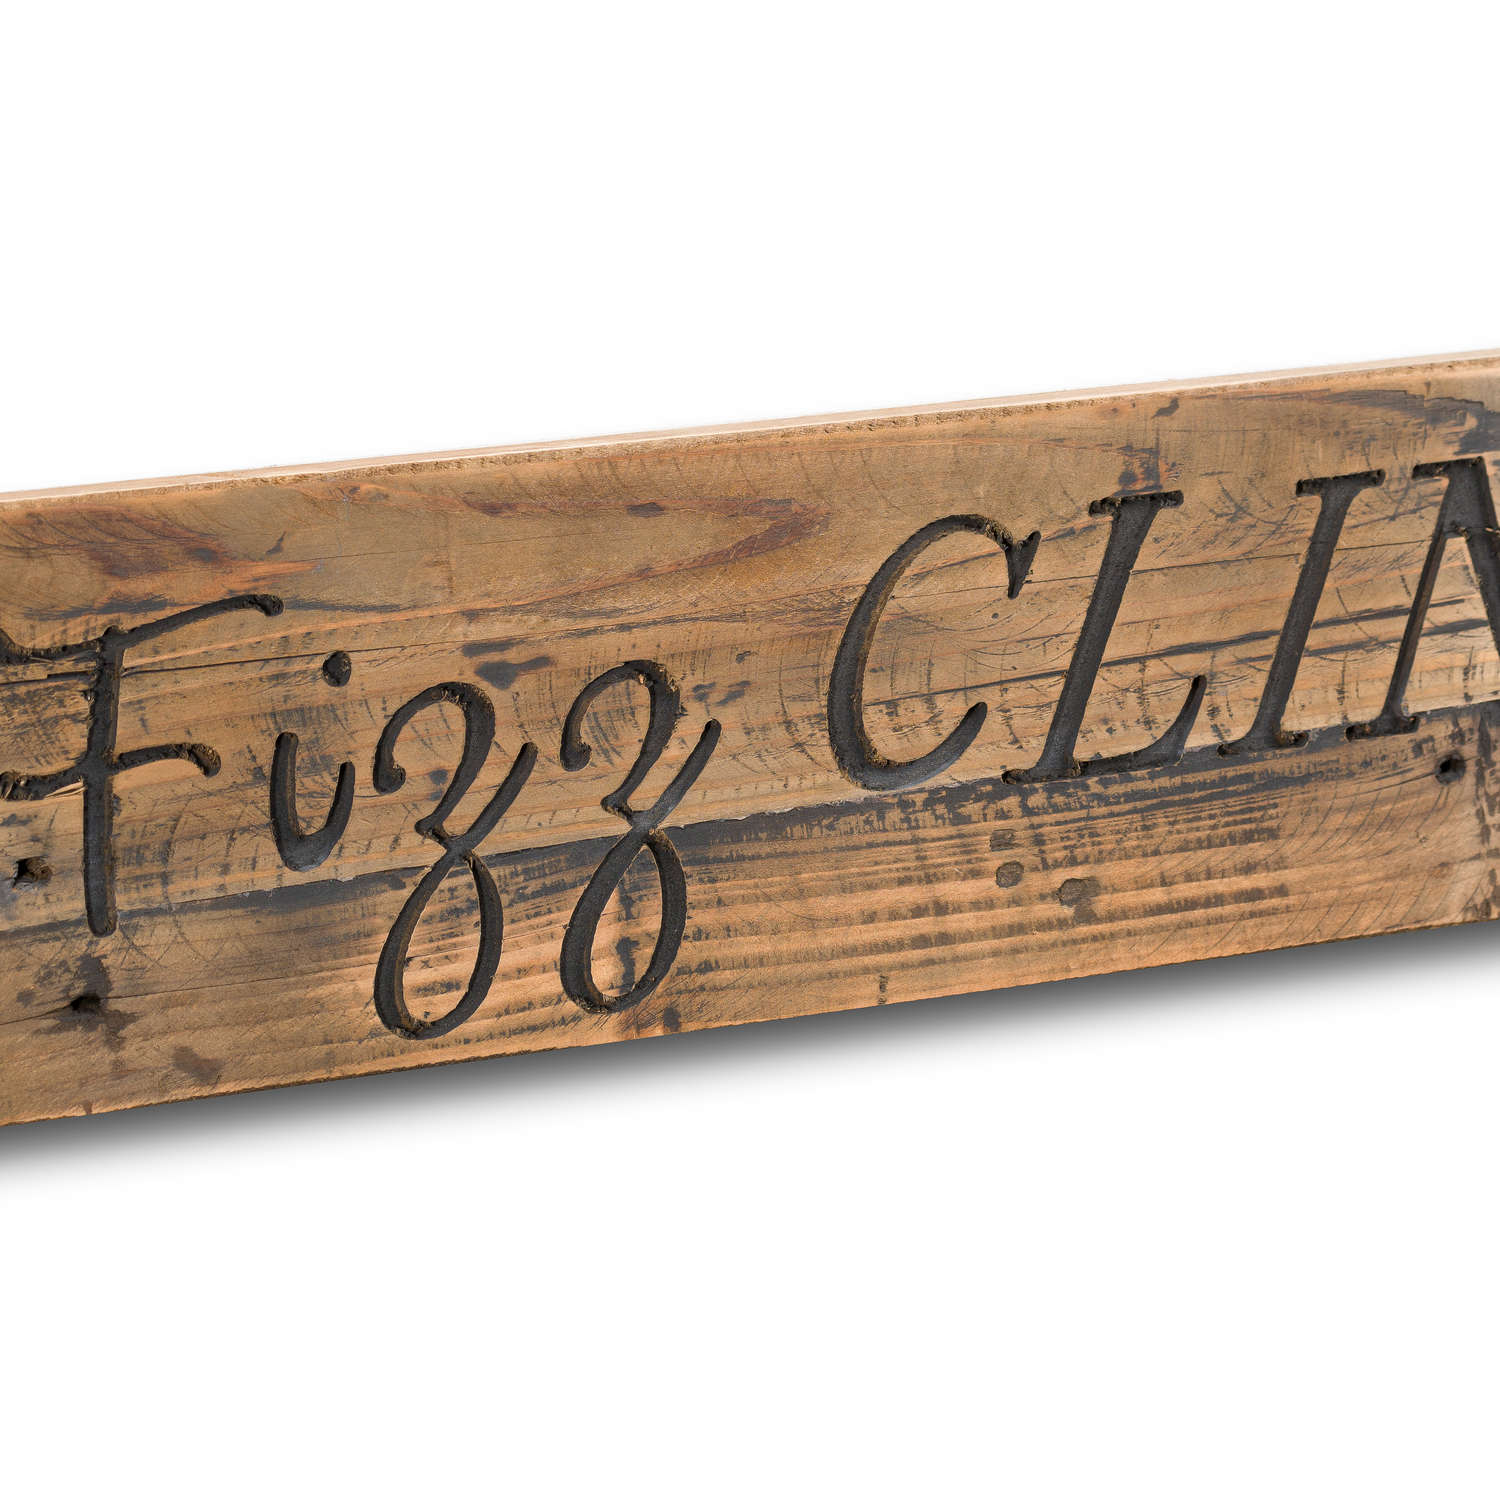 Pop Fizz Clink Drink Rustic Wooden Message Plaque - Image 2